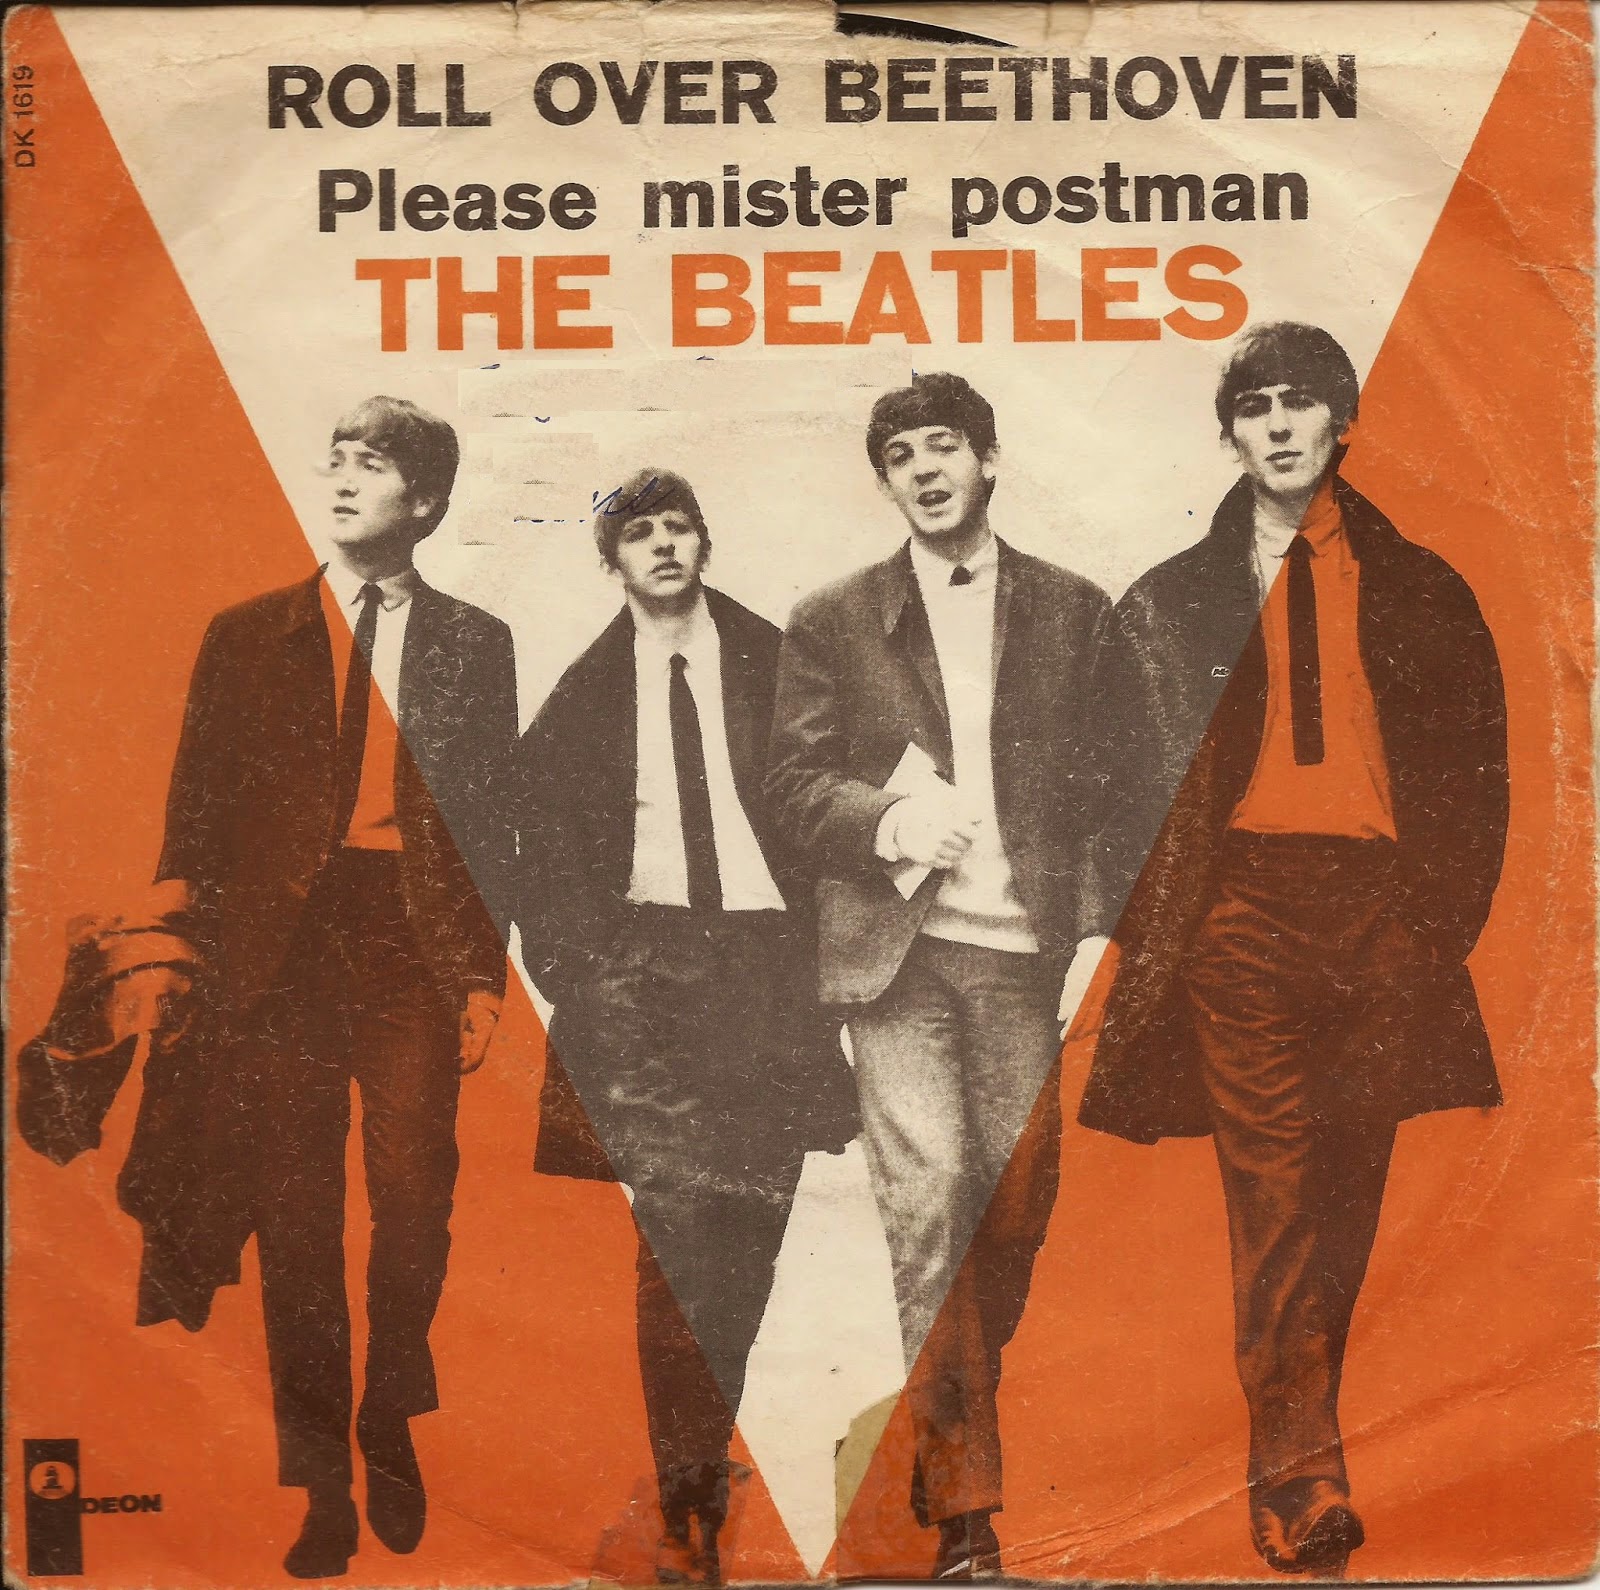 Mr postman. Мистер Постман Битлз. The Beatles - please Mr. Postman !. Roll over Beethoven. The Beatles - Roll over Beethoven.